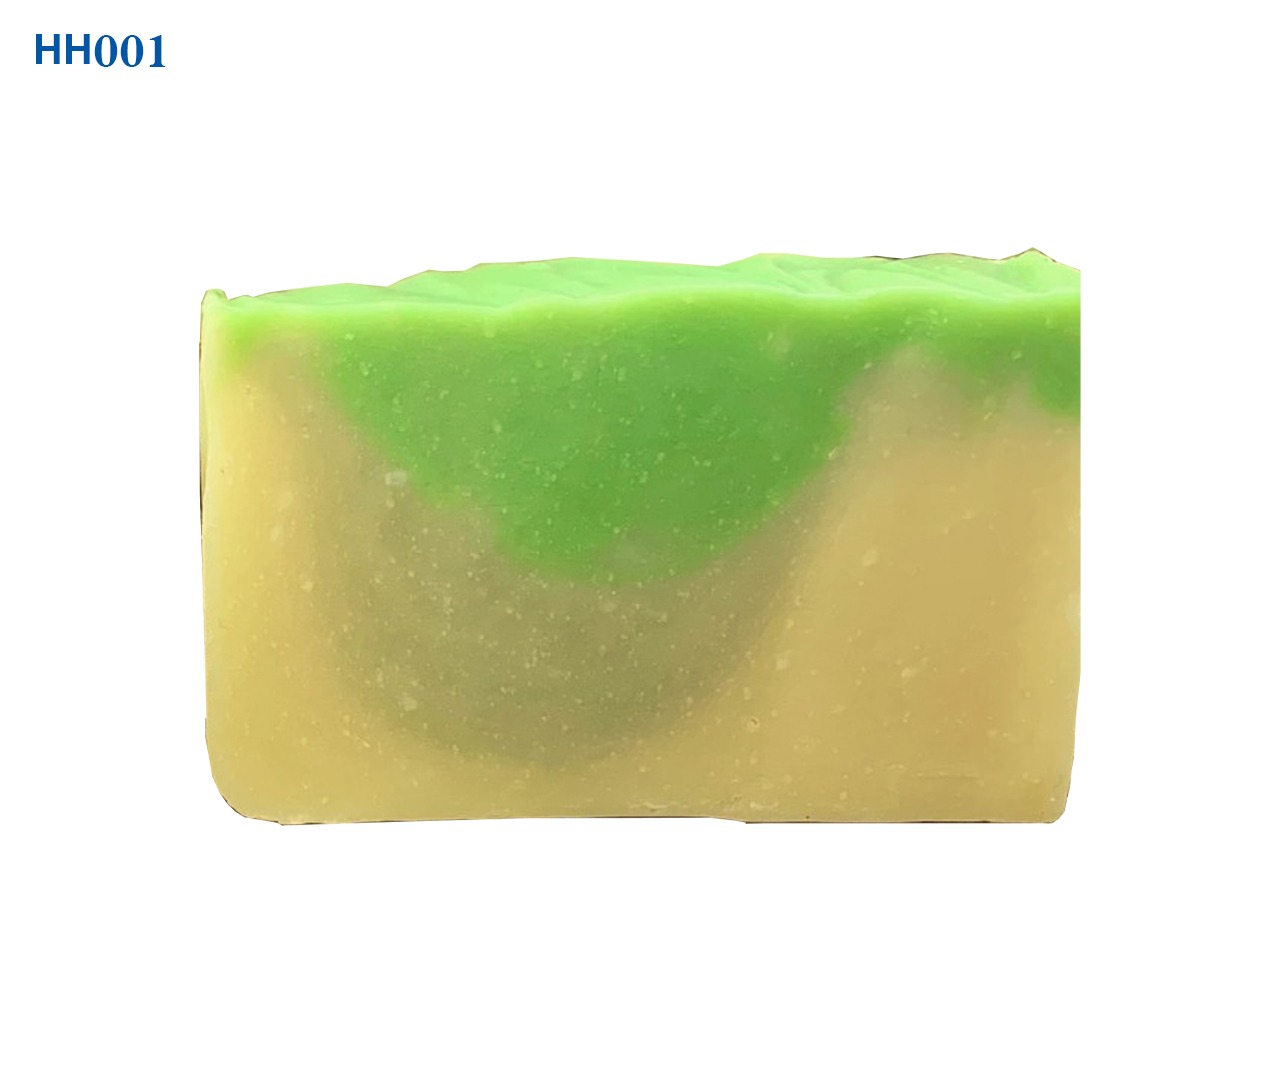 Emy's Soap - Hair Help Soap Bar - 125 gm - 1 Piece